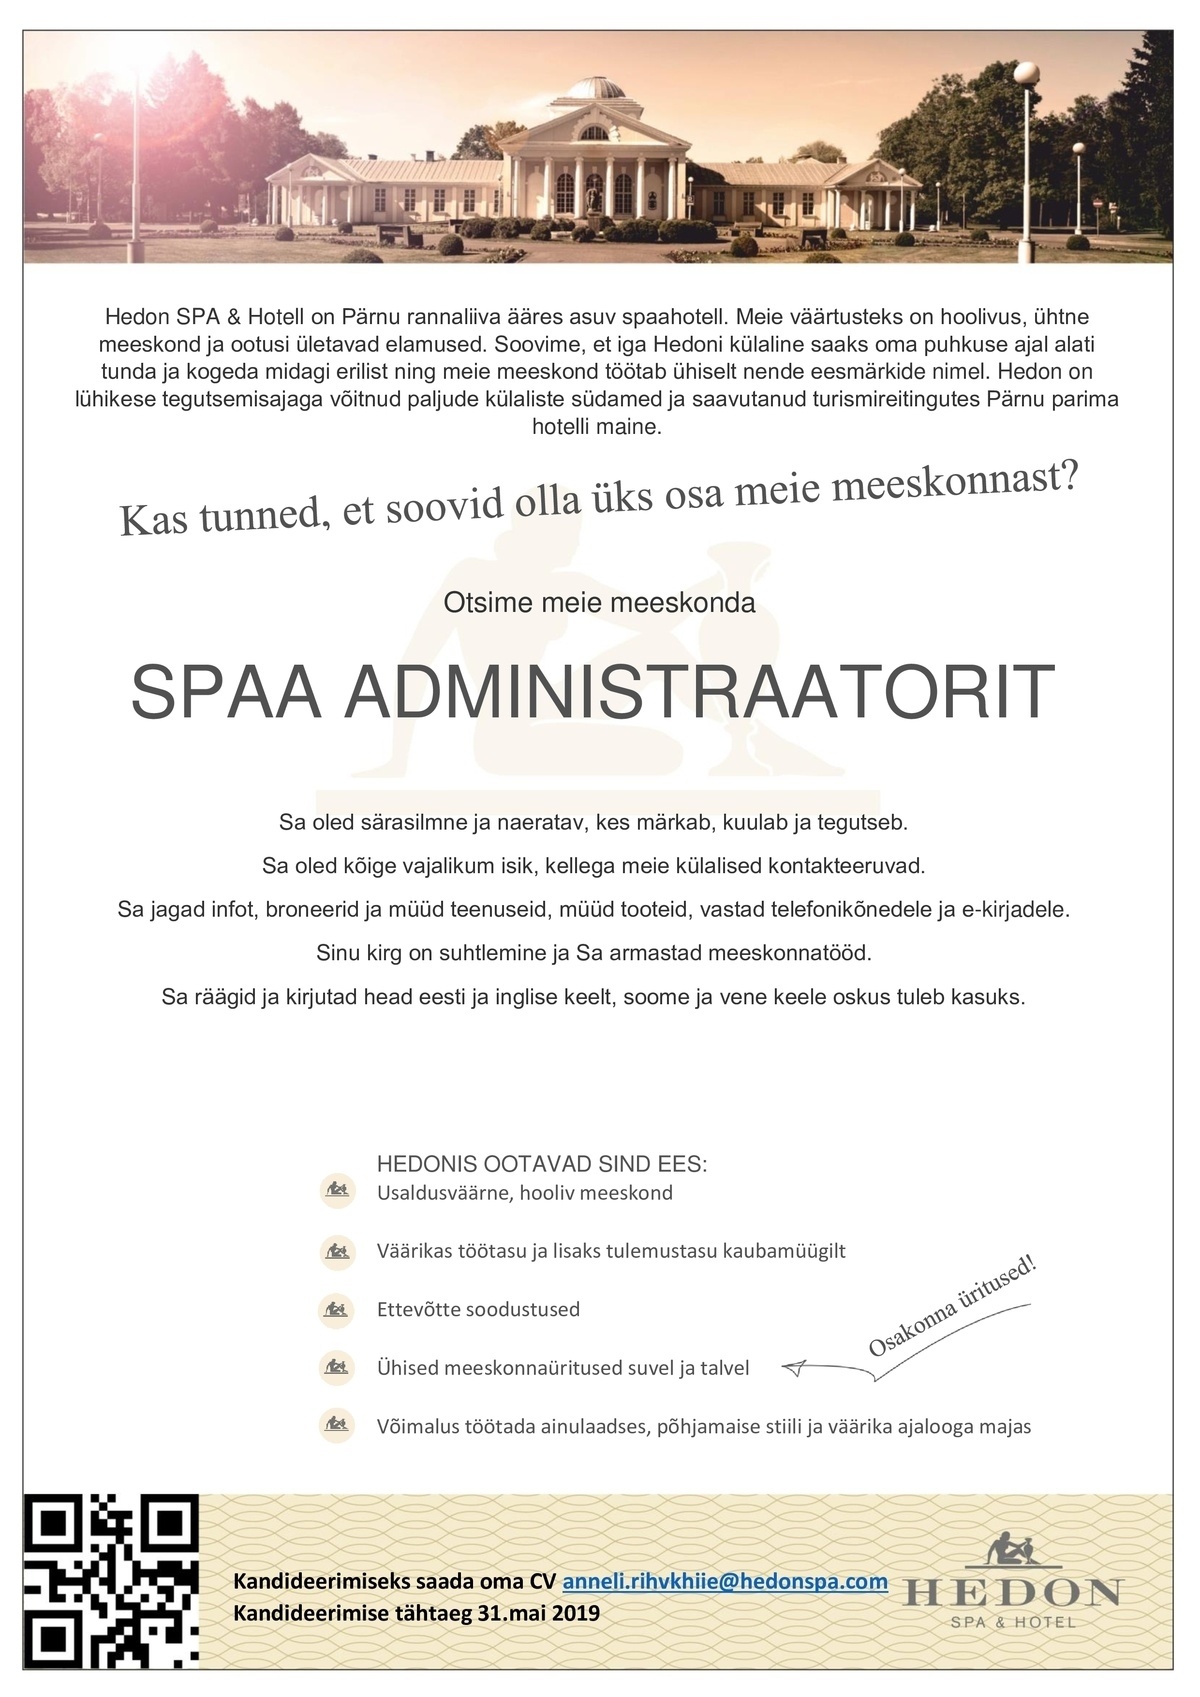 Supeluse Hotell OÜ Hedon SPA & HOTEL Spaa administraator